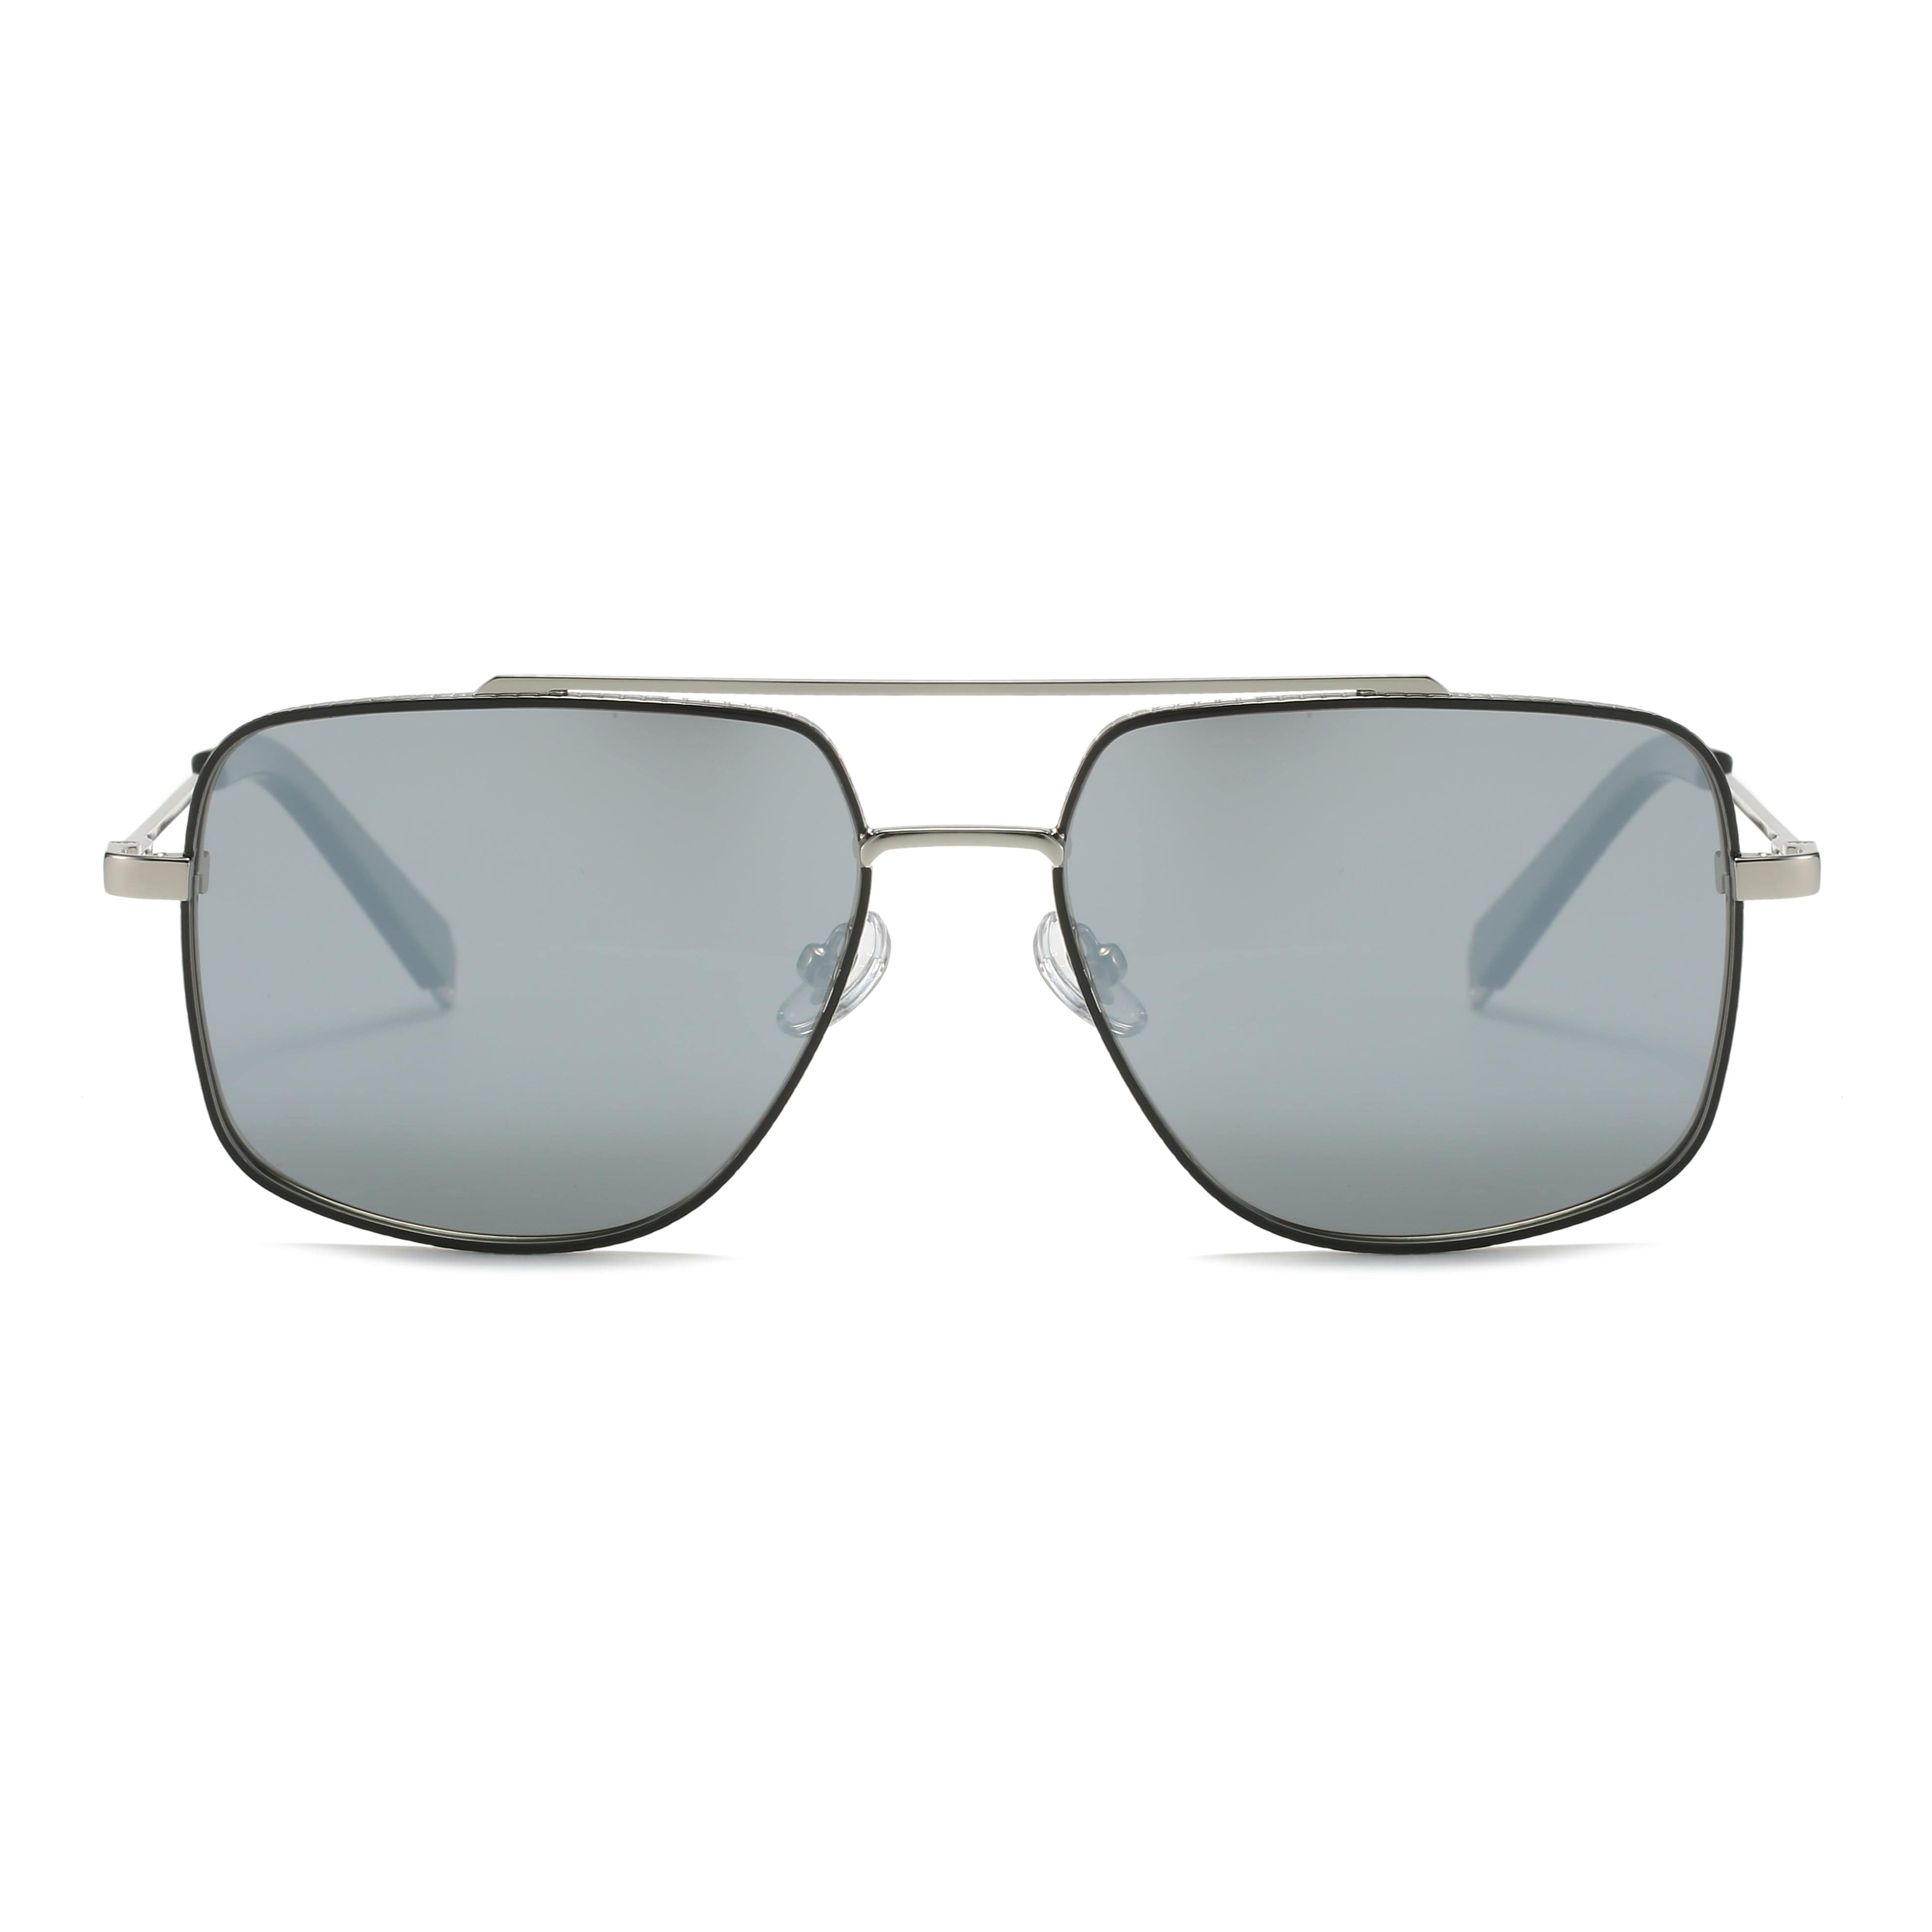 GIUSTIZIERI VECCHI Sunglasses Medium / Hit Grey Blaze Shield Duo